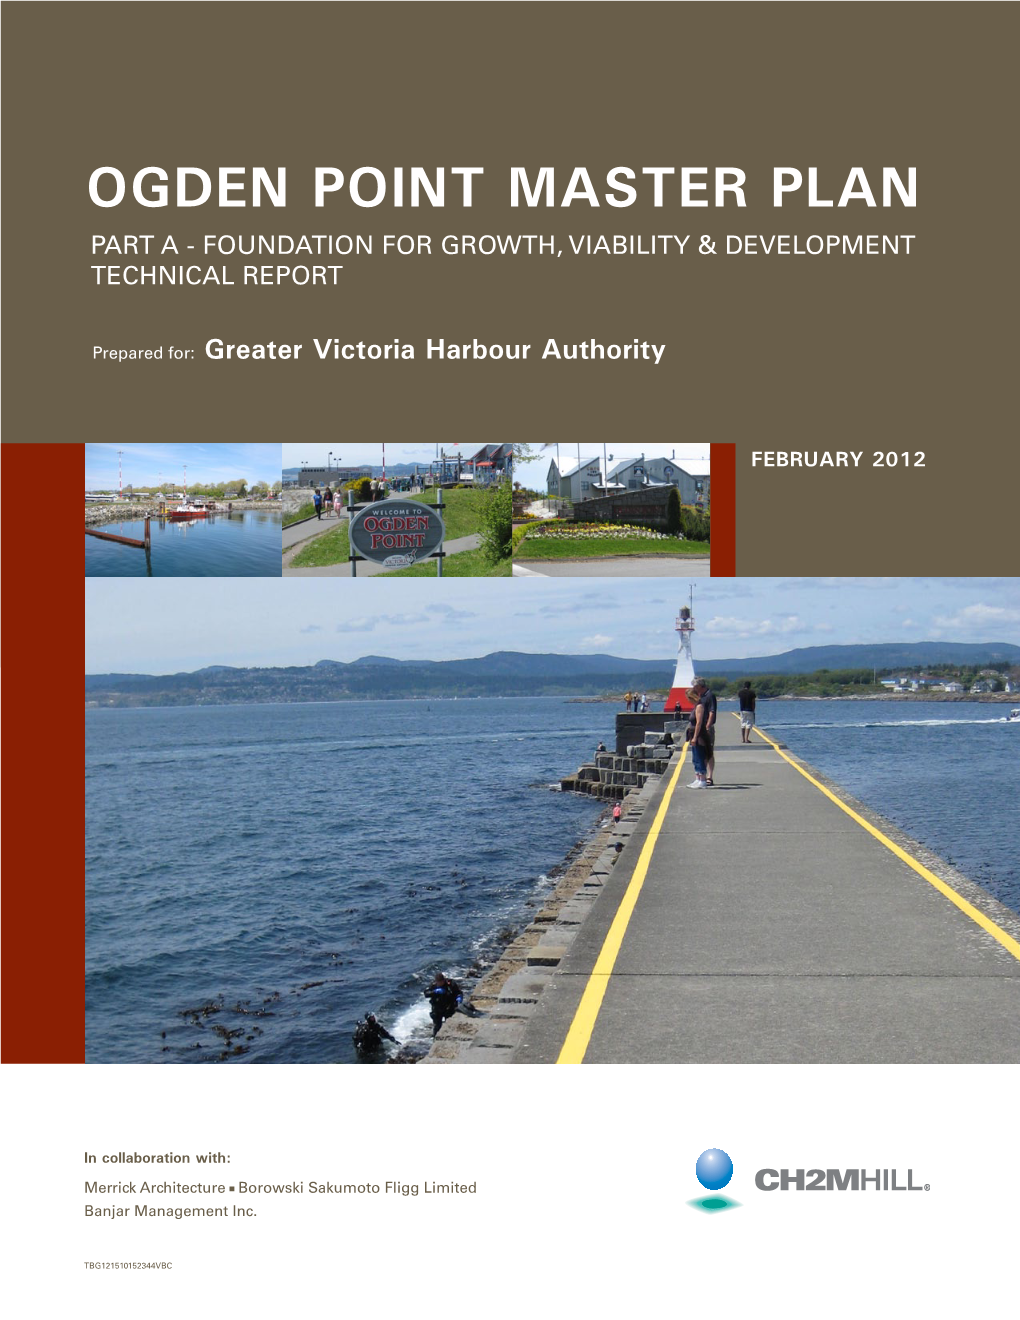 Ogden Point Master Plan Part a - Foundation for Growth, Viability & Development Technical Report